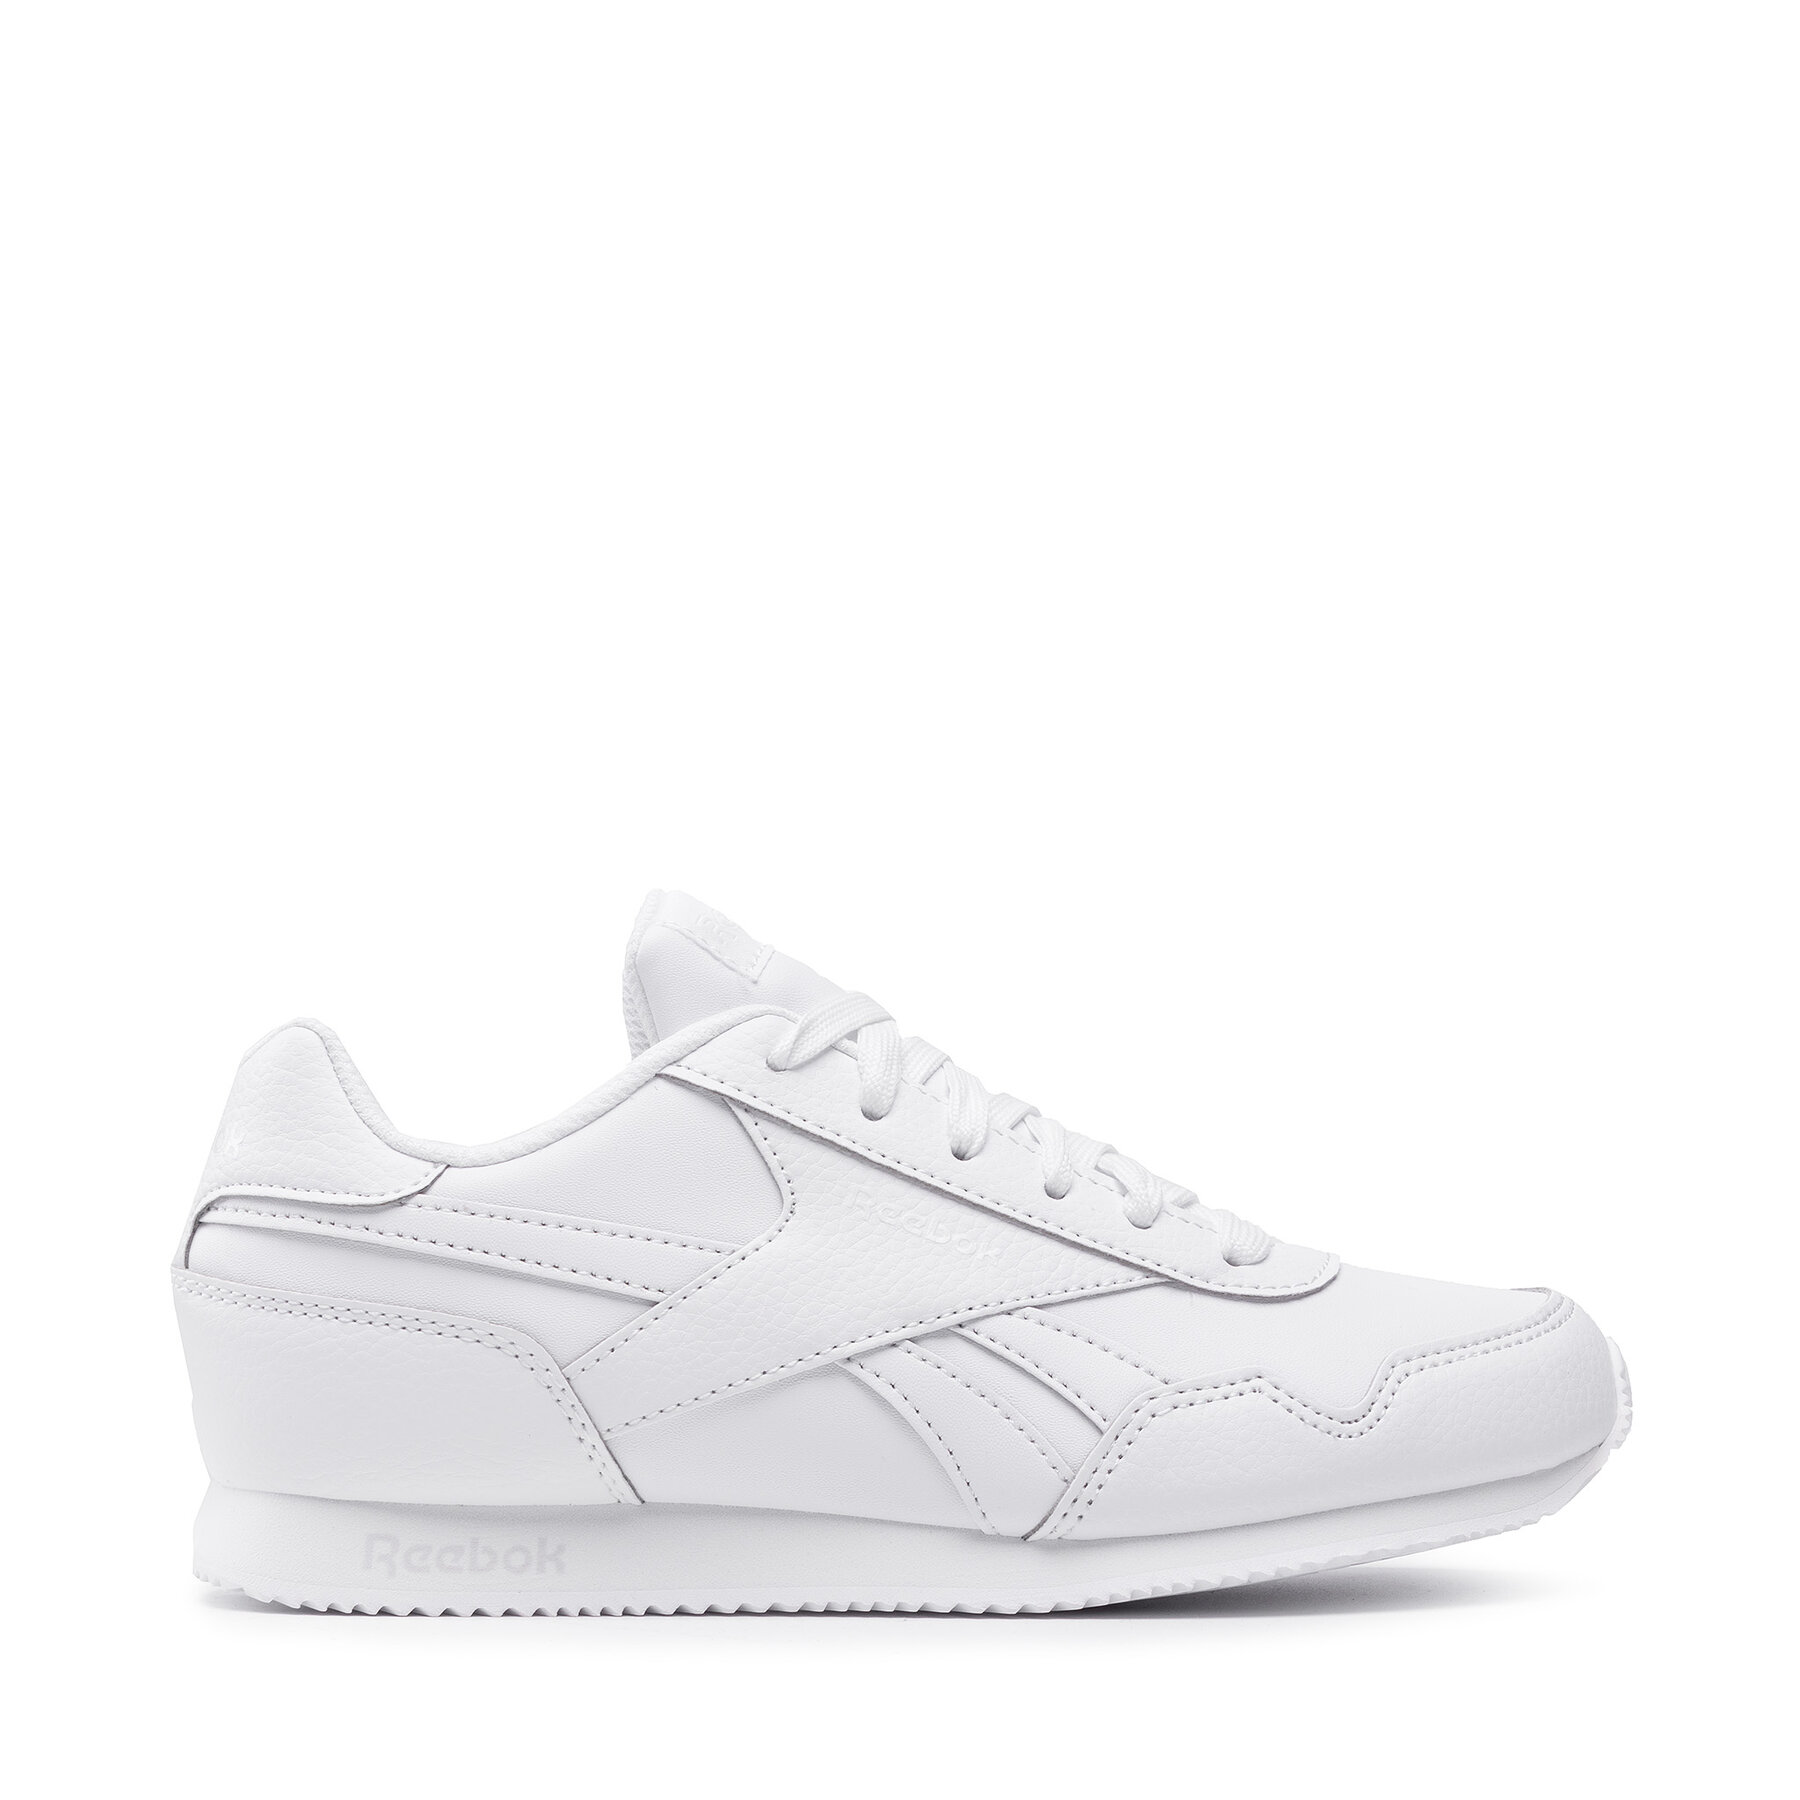 Schuhe Reebok Royal Cljog 3.0 FV1493 White/White/White von Reebok